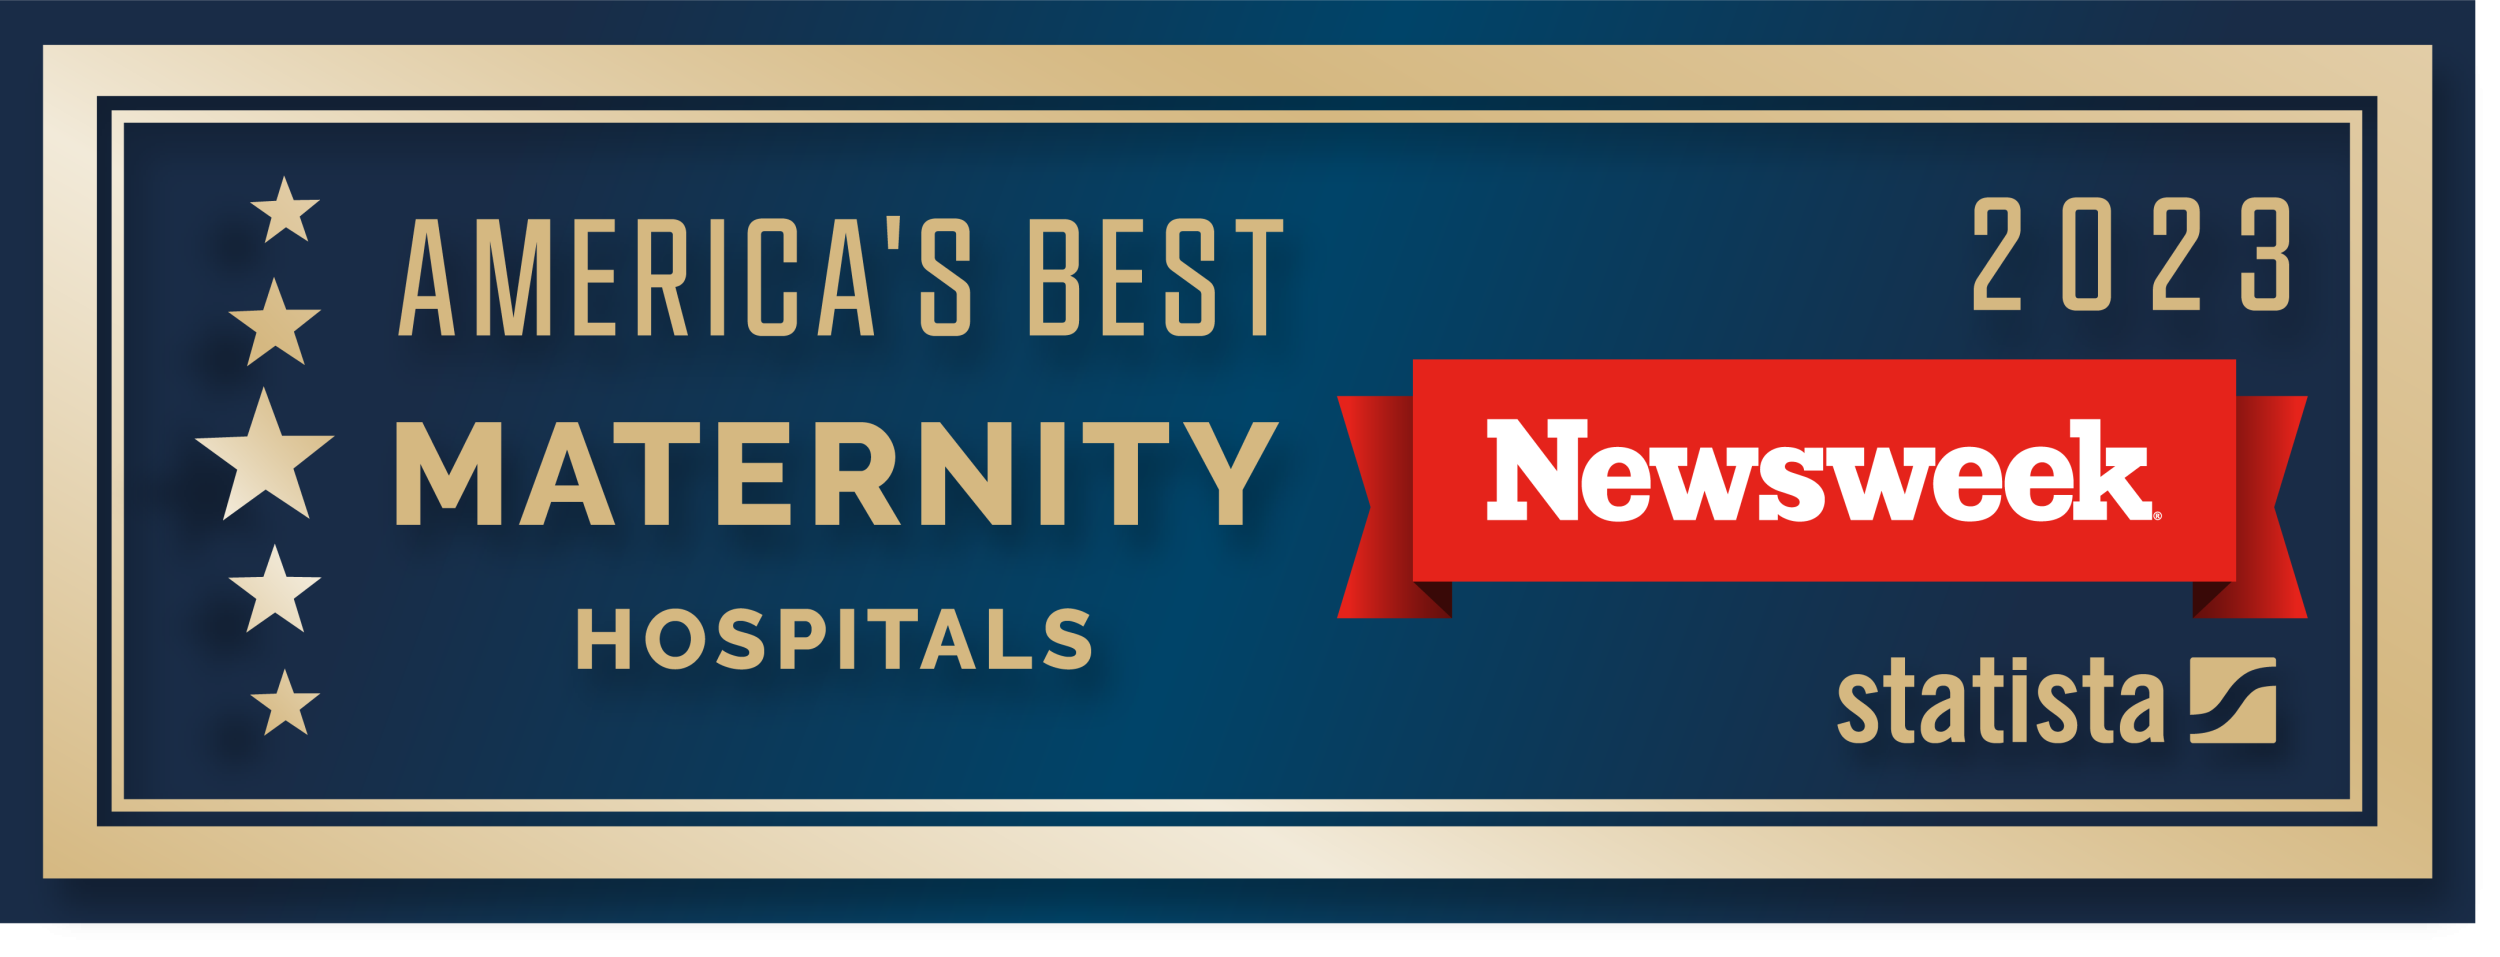 Best Maternity Hospitals 2023